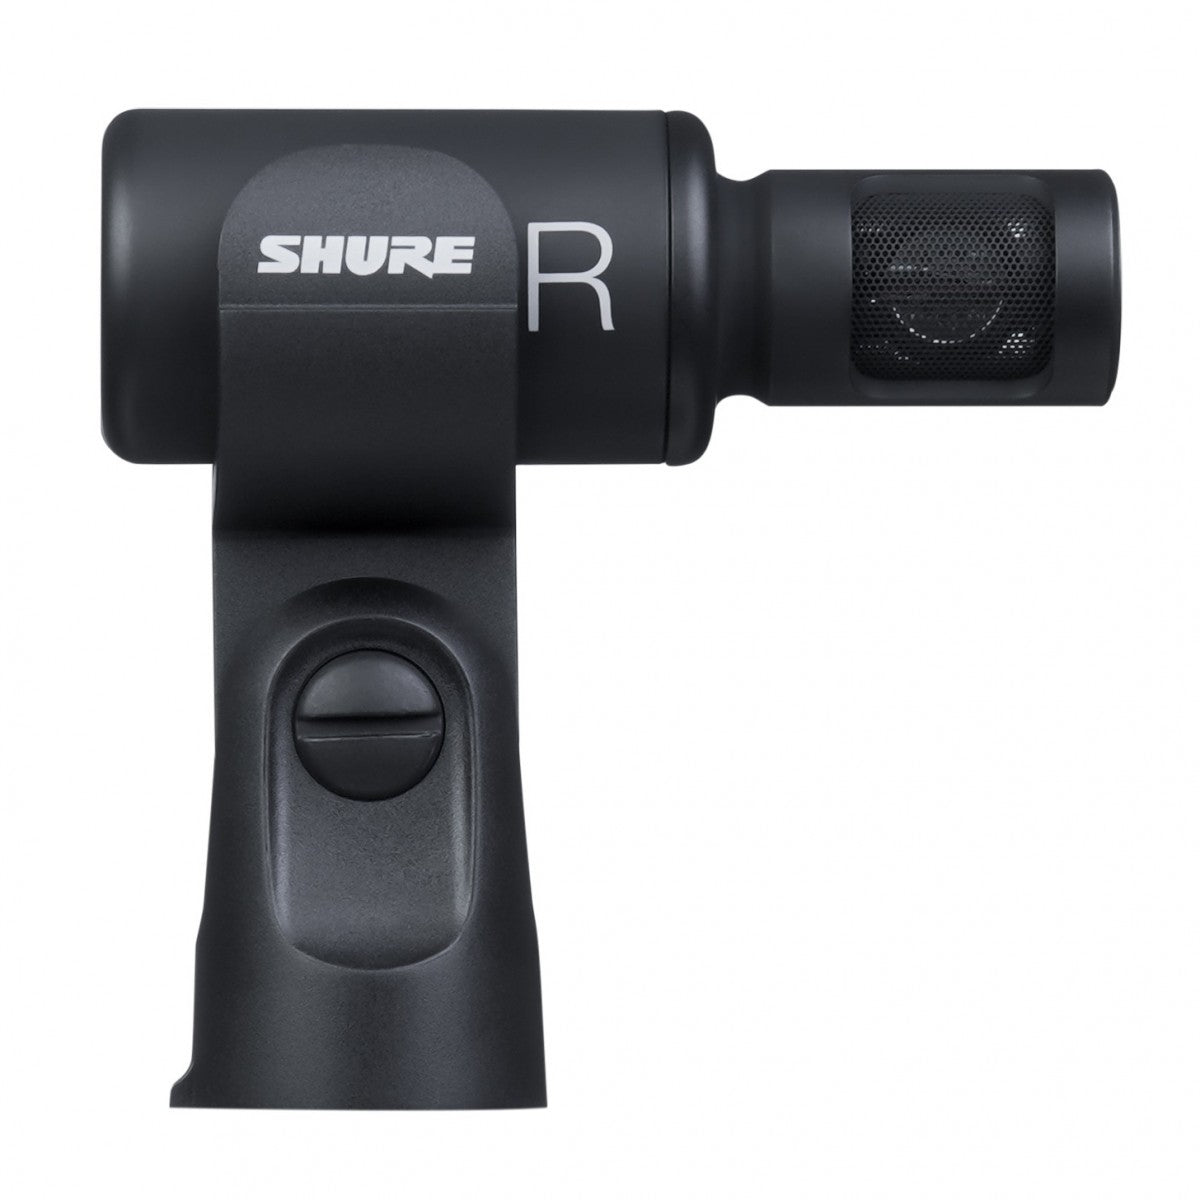 Shure MV88 Plus Stereo USB Microphone